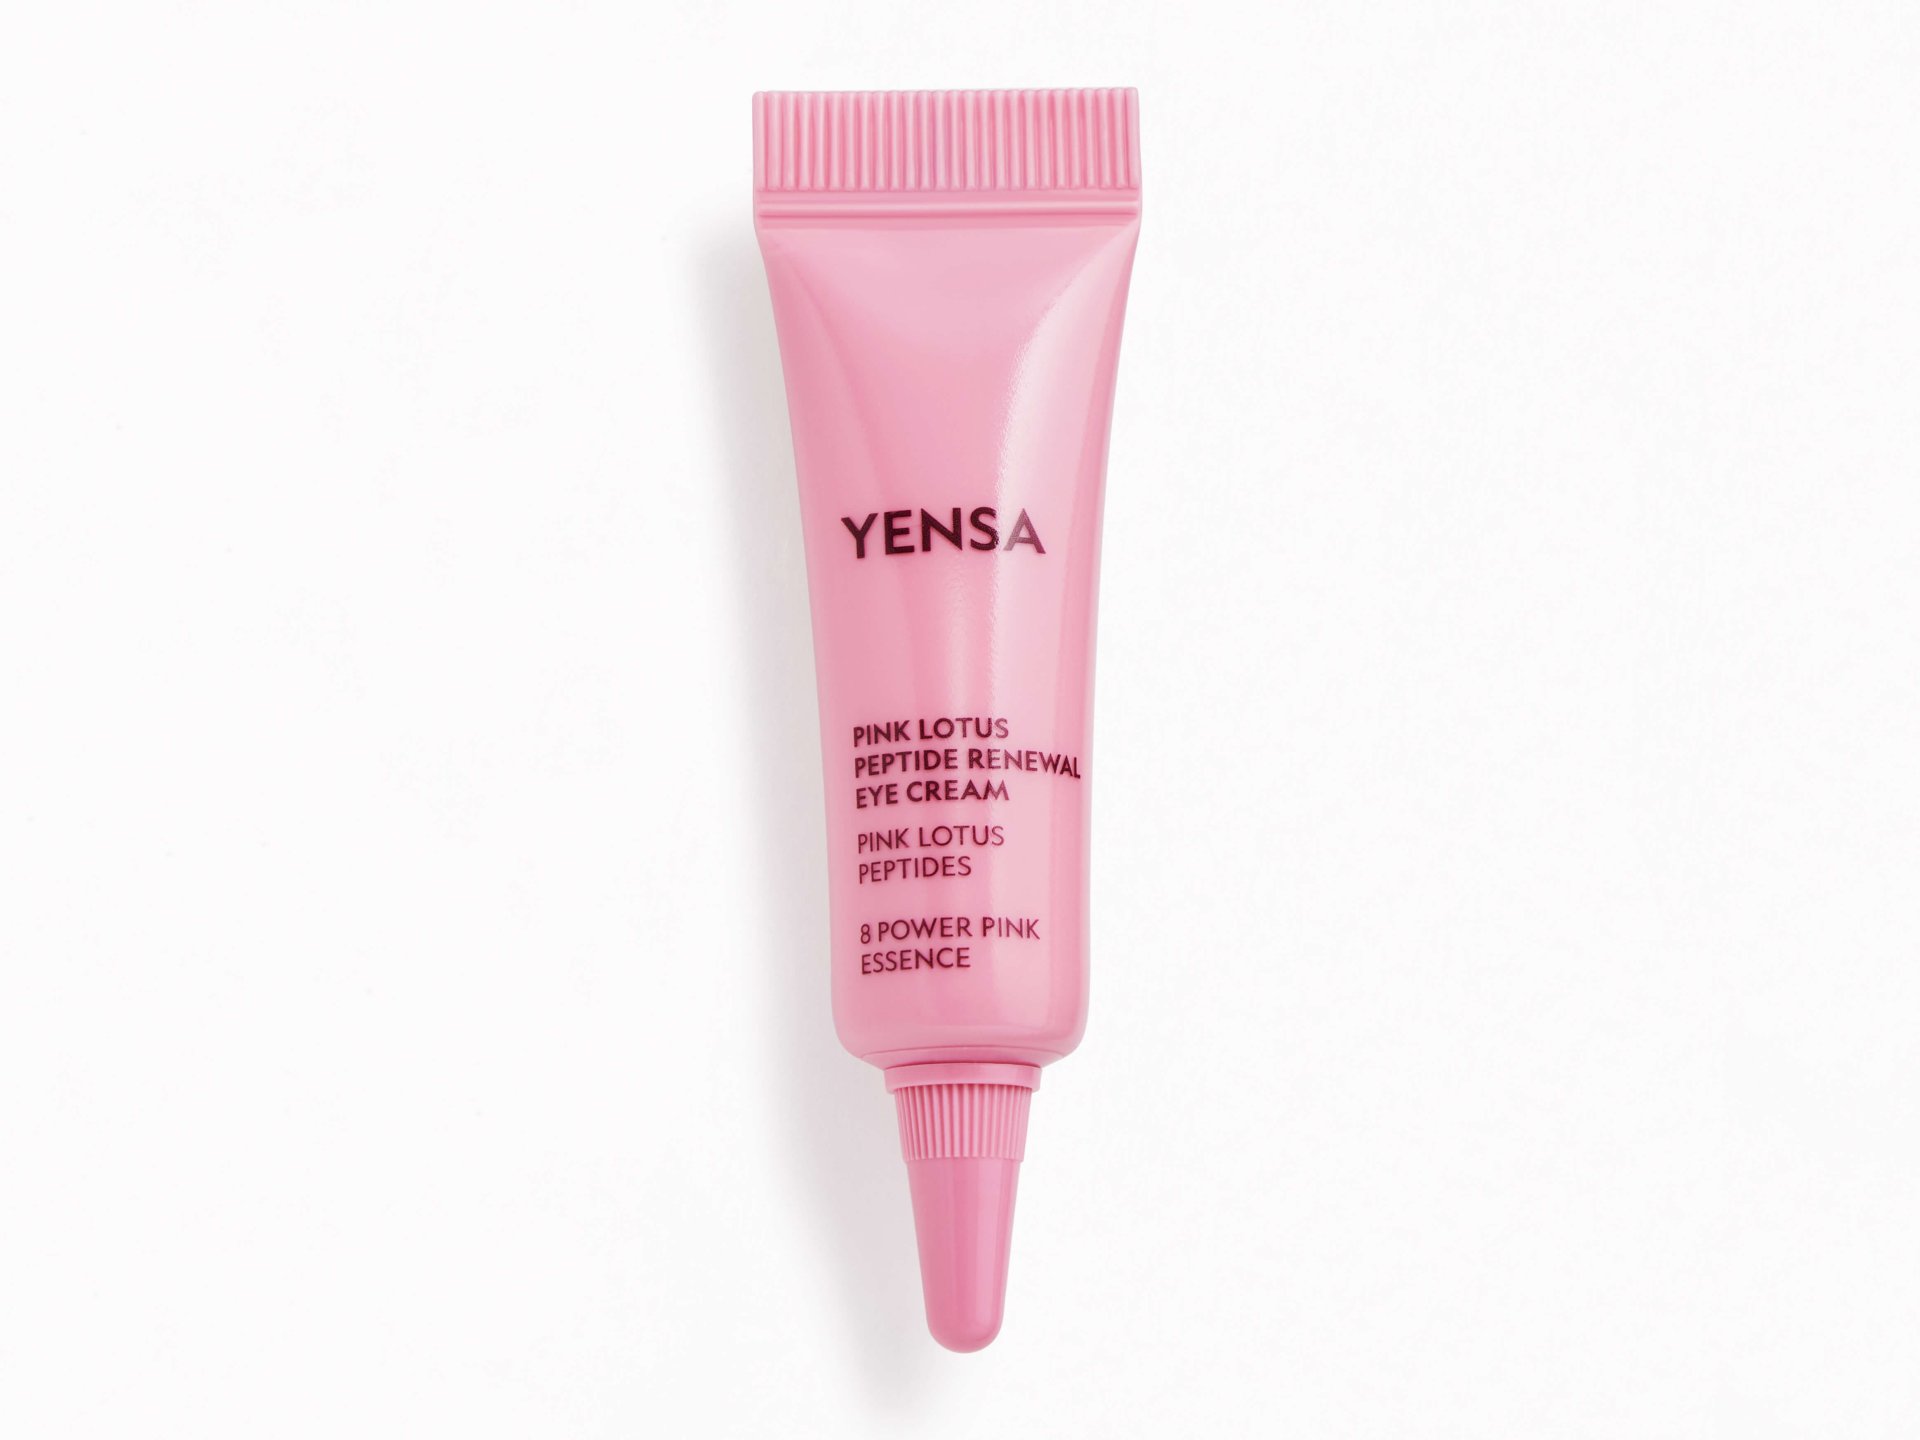 GB_YENSA BEAUTY_Pink Lotus Peptide Renewal Eye Cream Travel